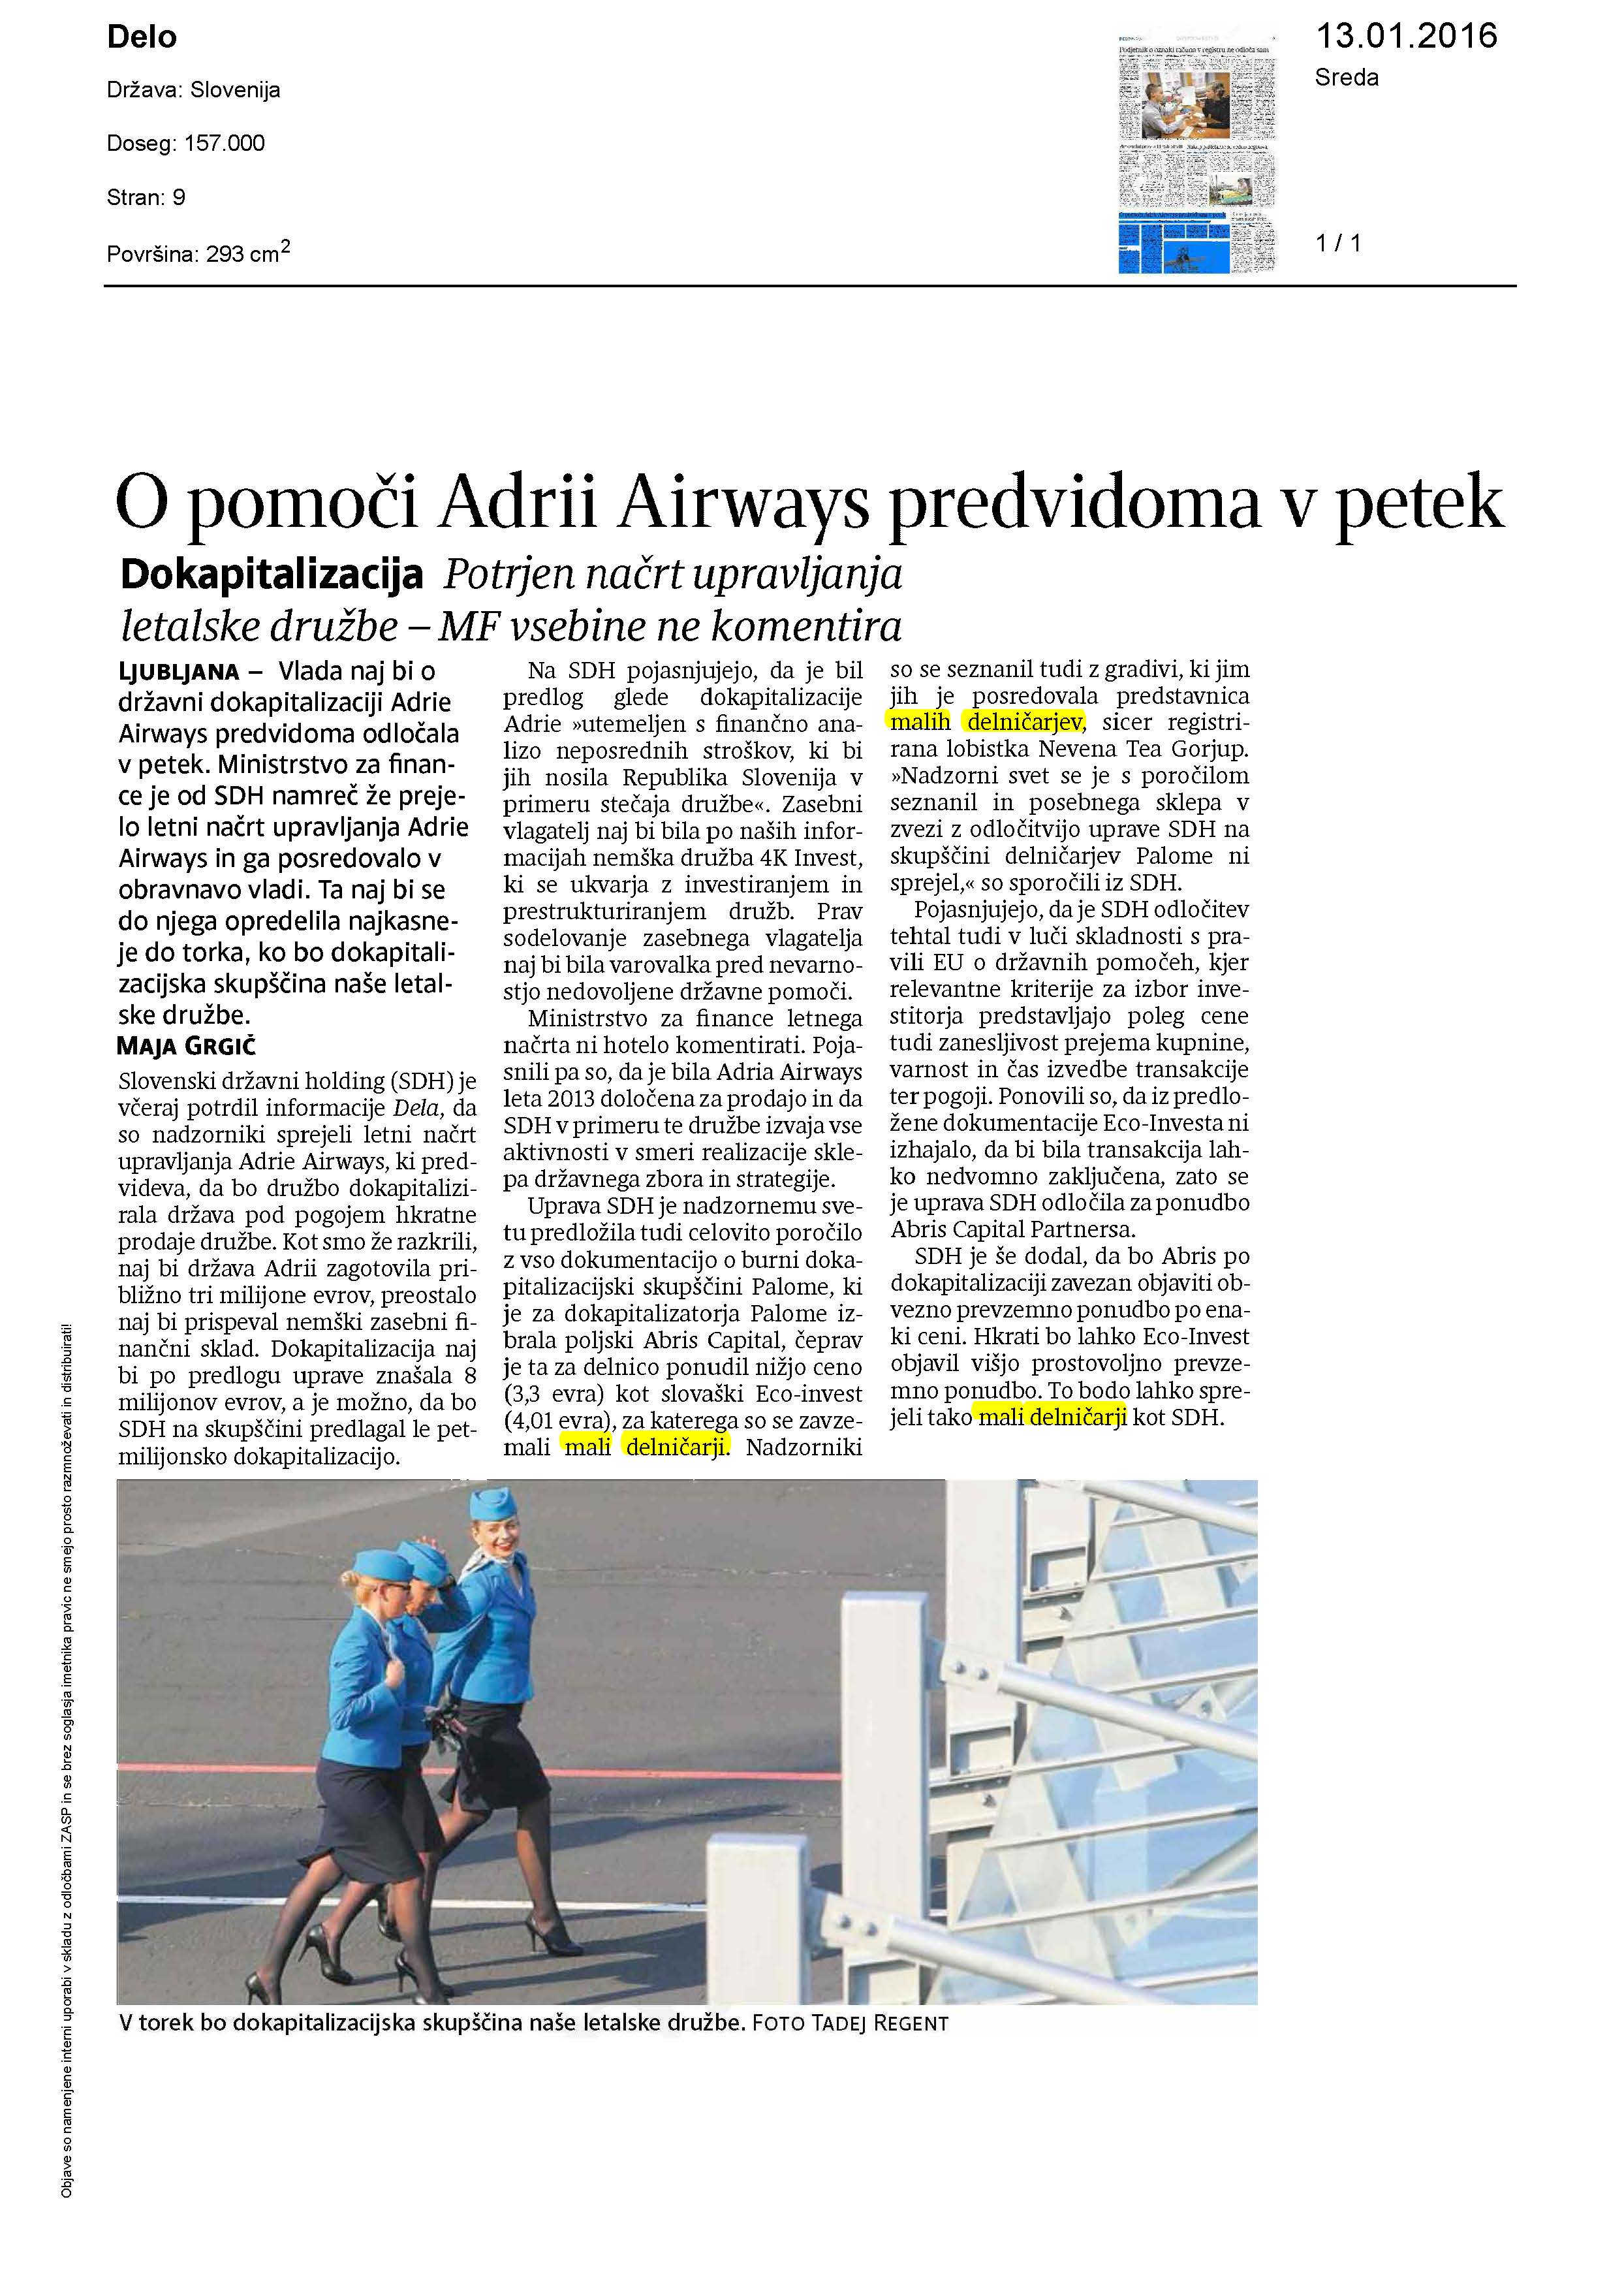 O pomoči Adrii Airways predvidoma v petek